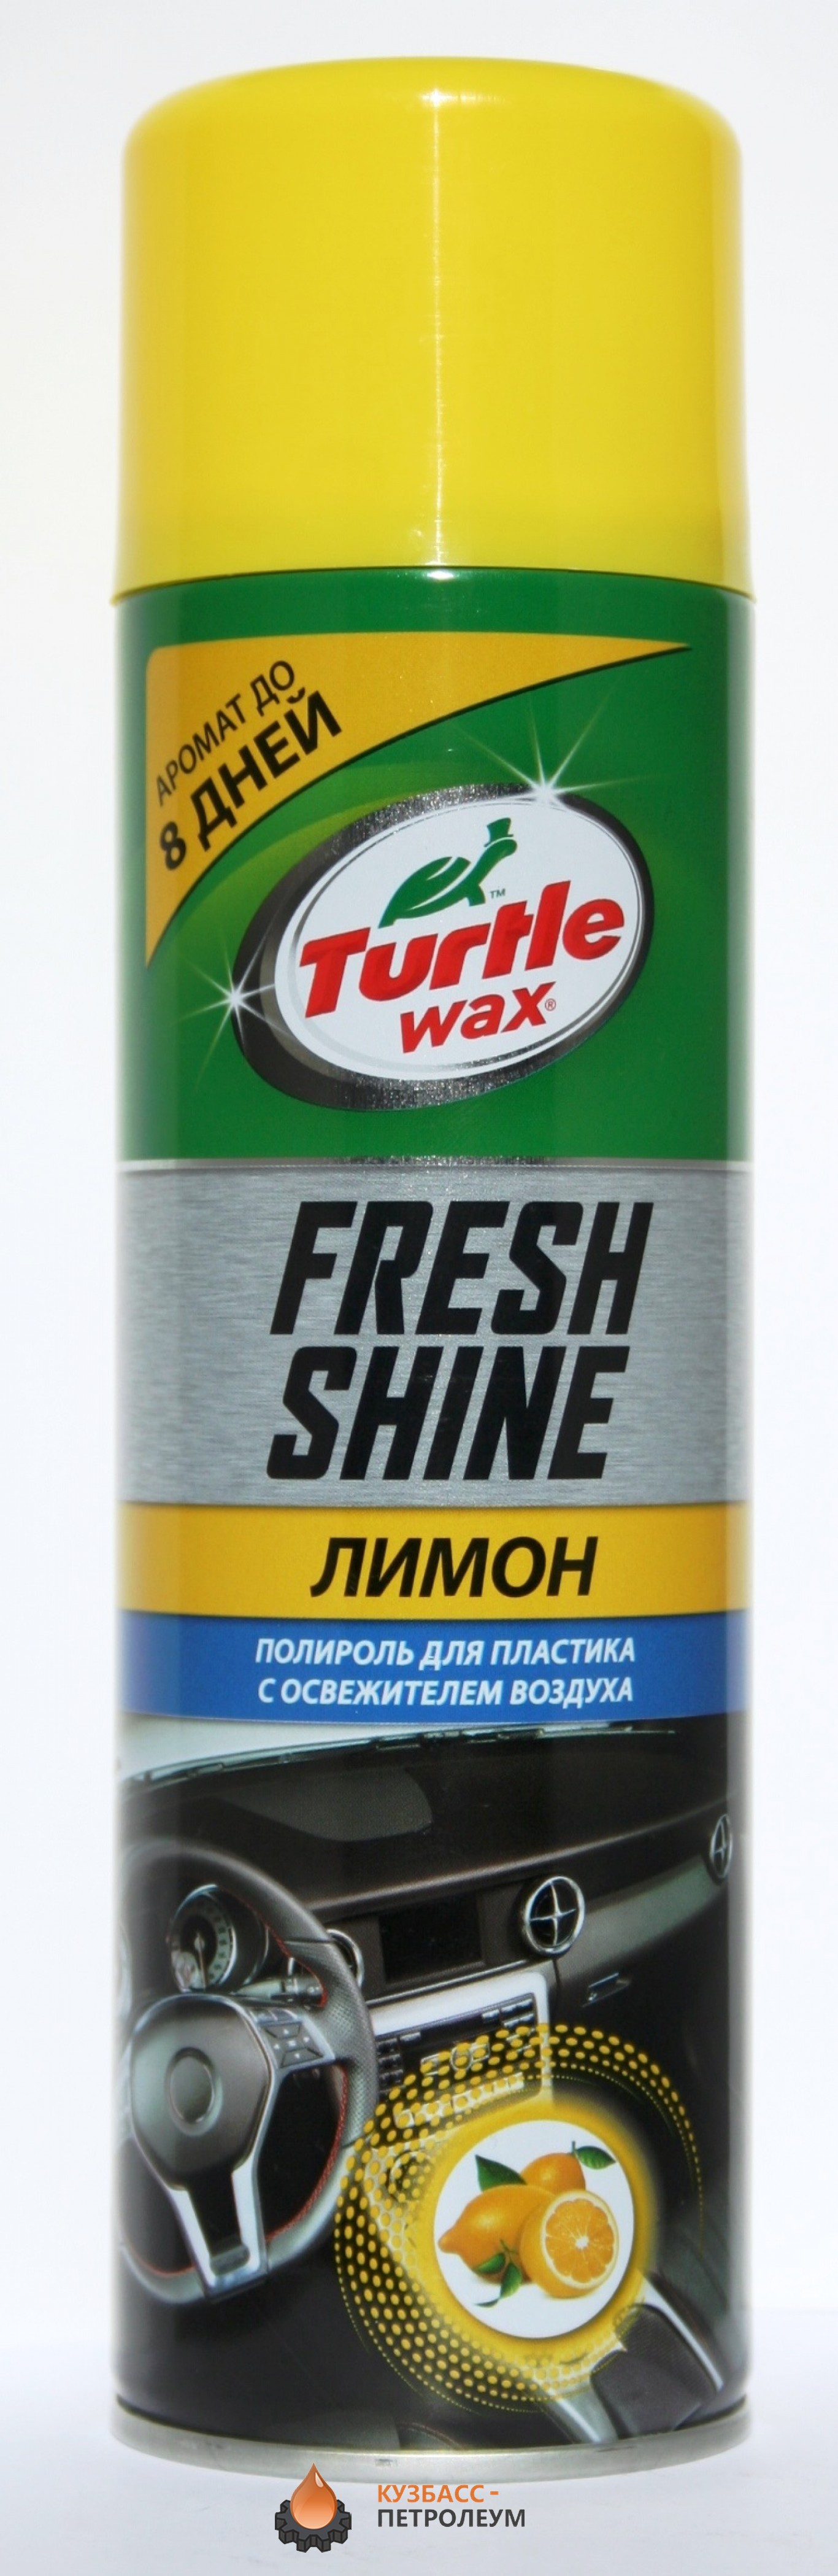 Полироли turtle. Turtle Wax 53010. Полироль пластика Turtle Wax Fresh Shine с освежителем воздуха Vanilla (ваниль) 500мл. Тартл Вакс полироль для пластика. Полироль Turtle Wax fg6527.